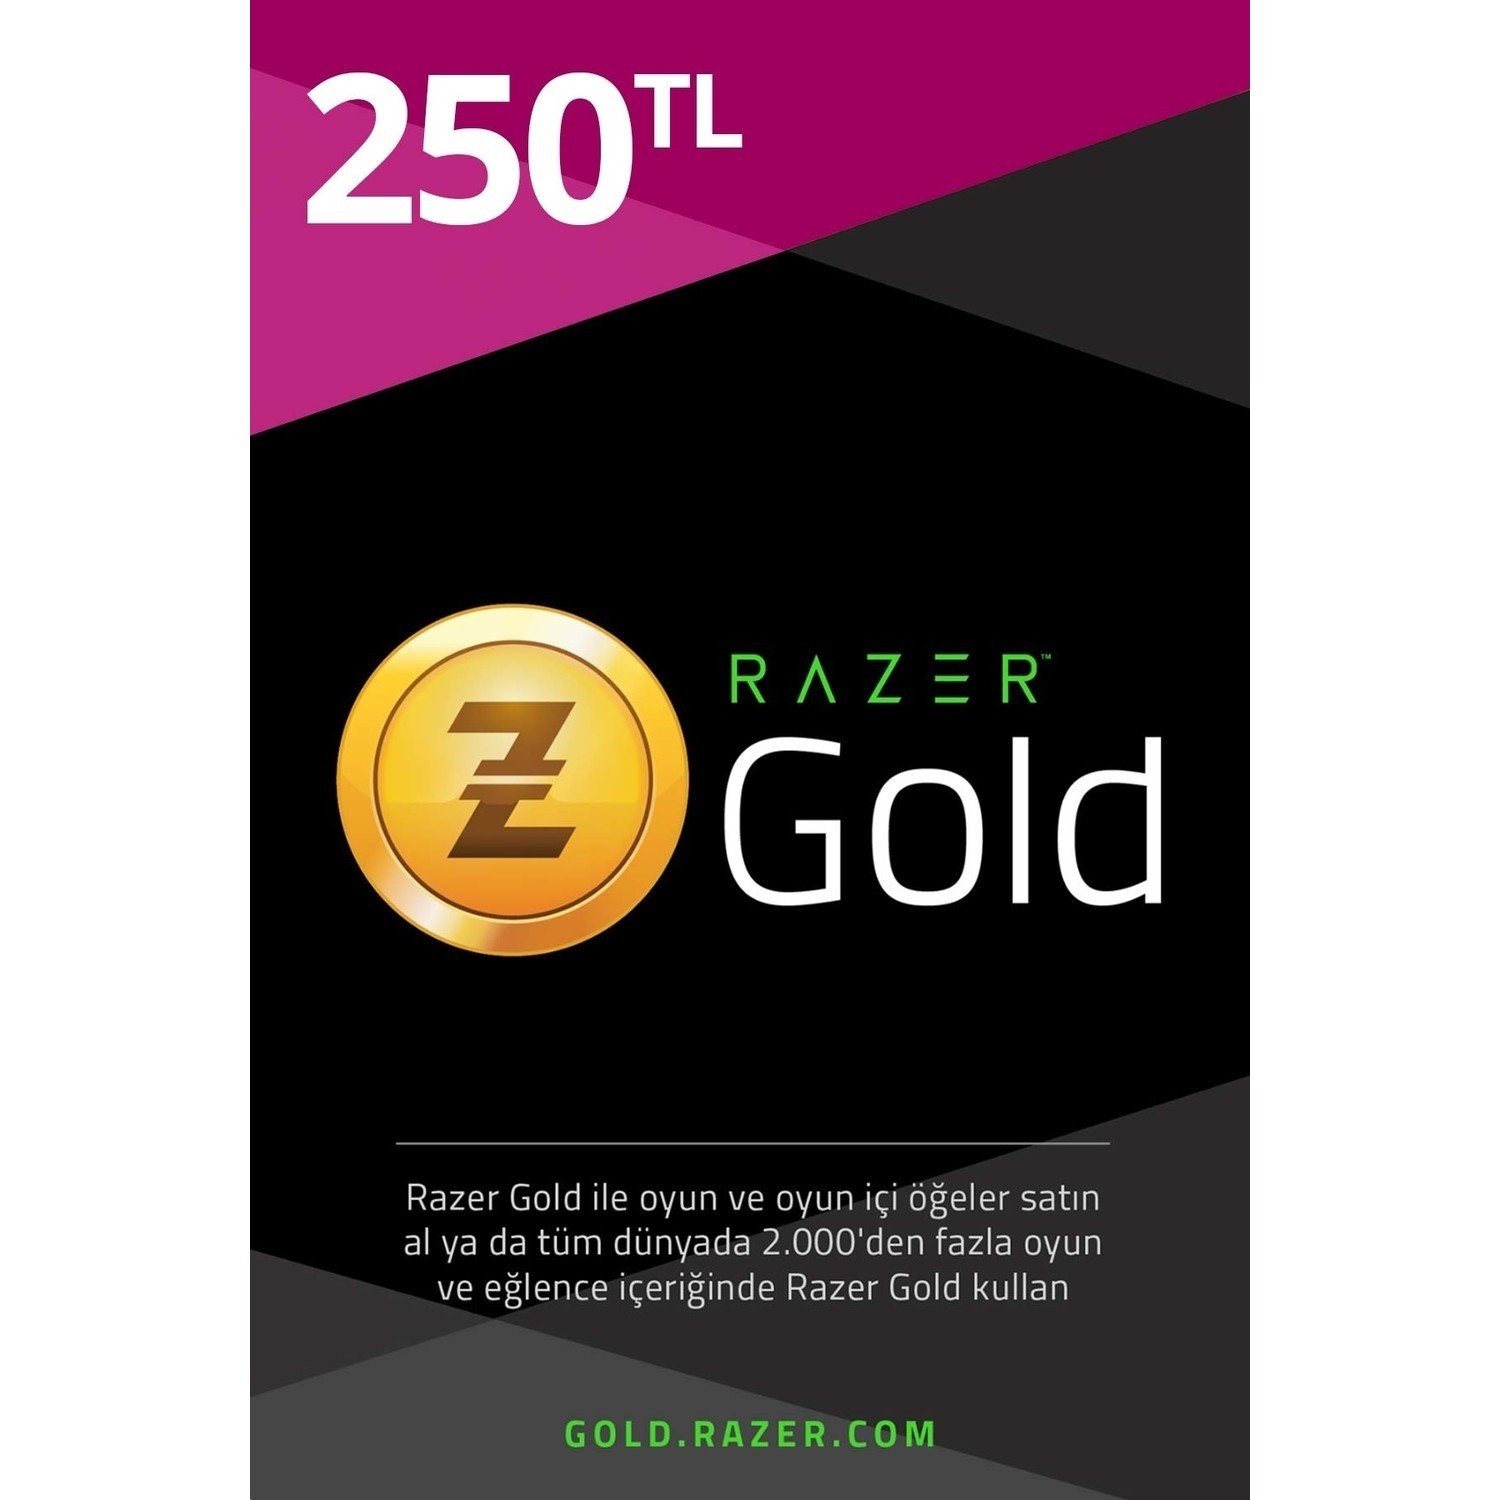 250 gold. Razer Gold. Razer Gold аккаунт. Заказать карта Razer Gold 500 b. Razer Gold Card PNG.